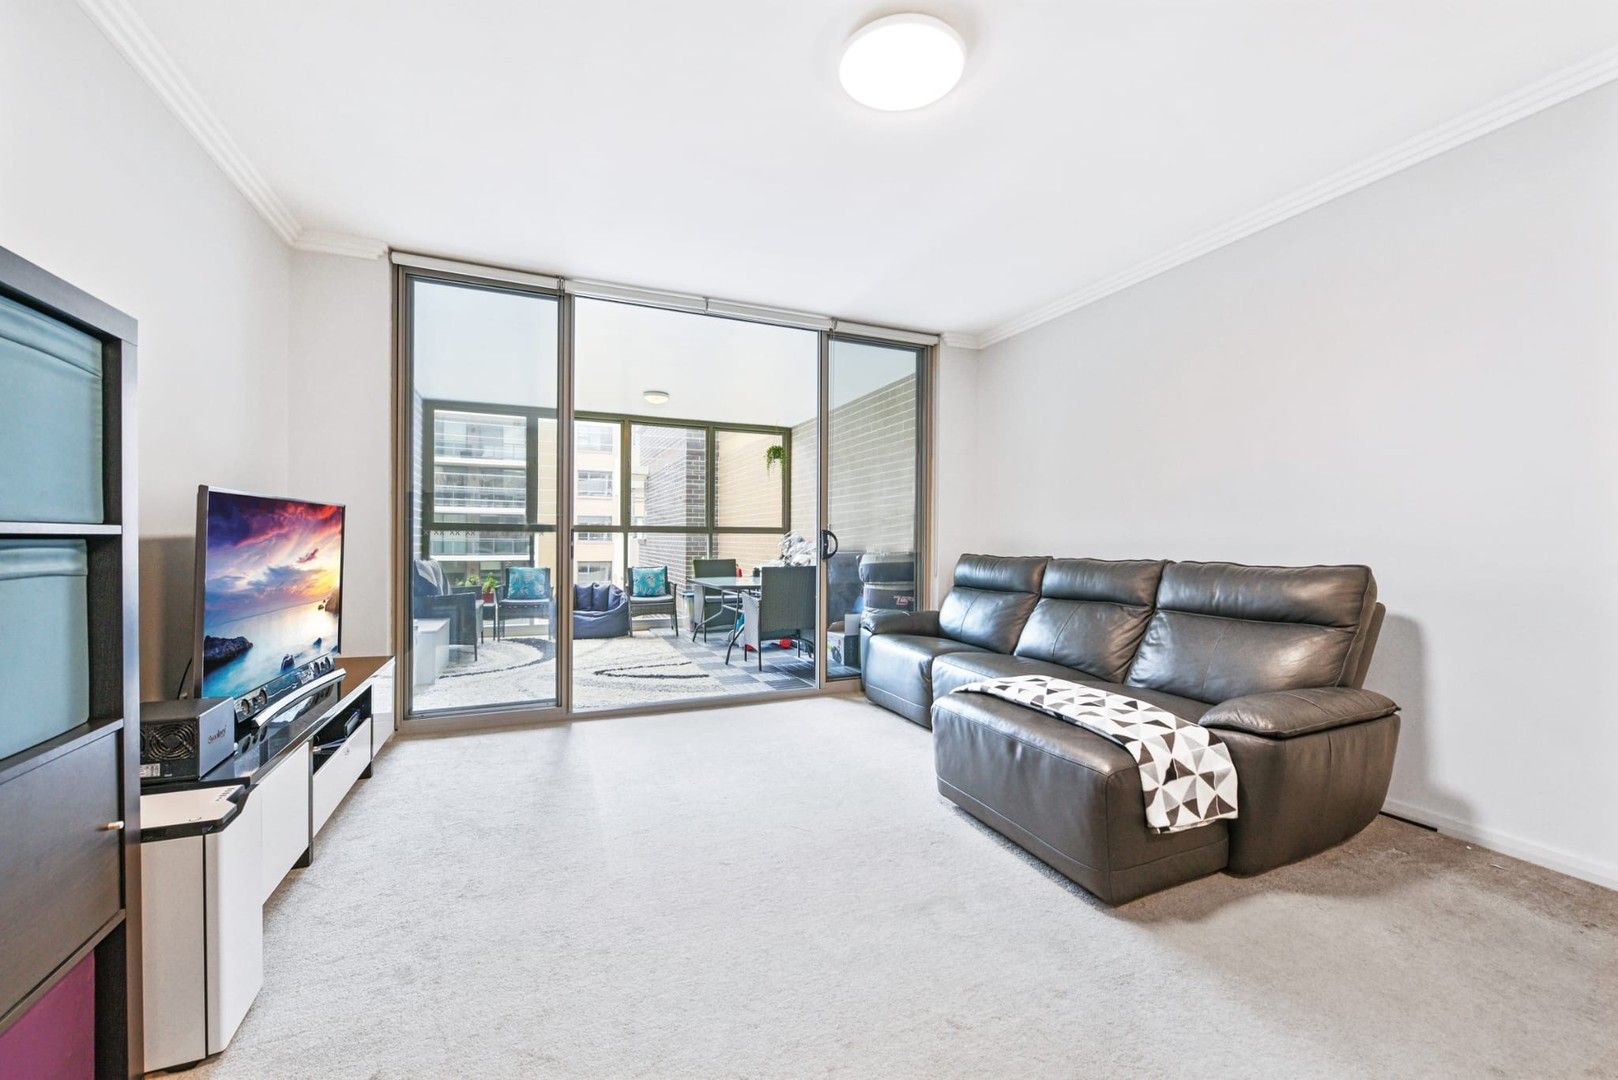 2 bedrooms Apartment / Unit / Flat in 21/24 John Street Mascot, NSW, 2020 MASCOT NSW, 2020